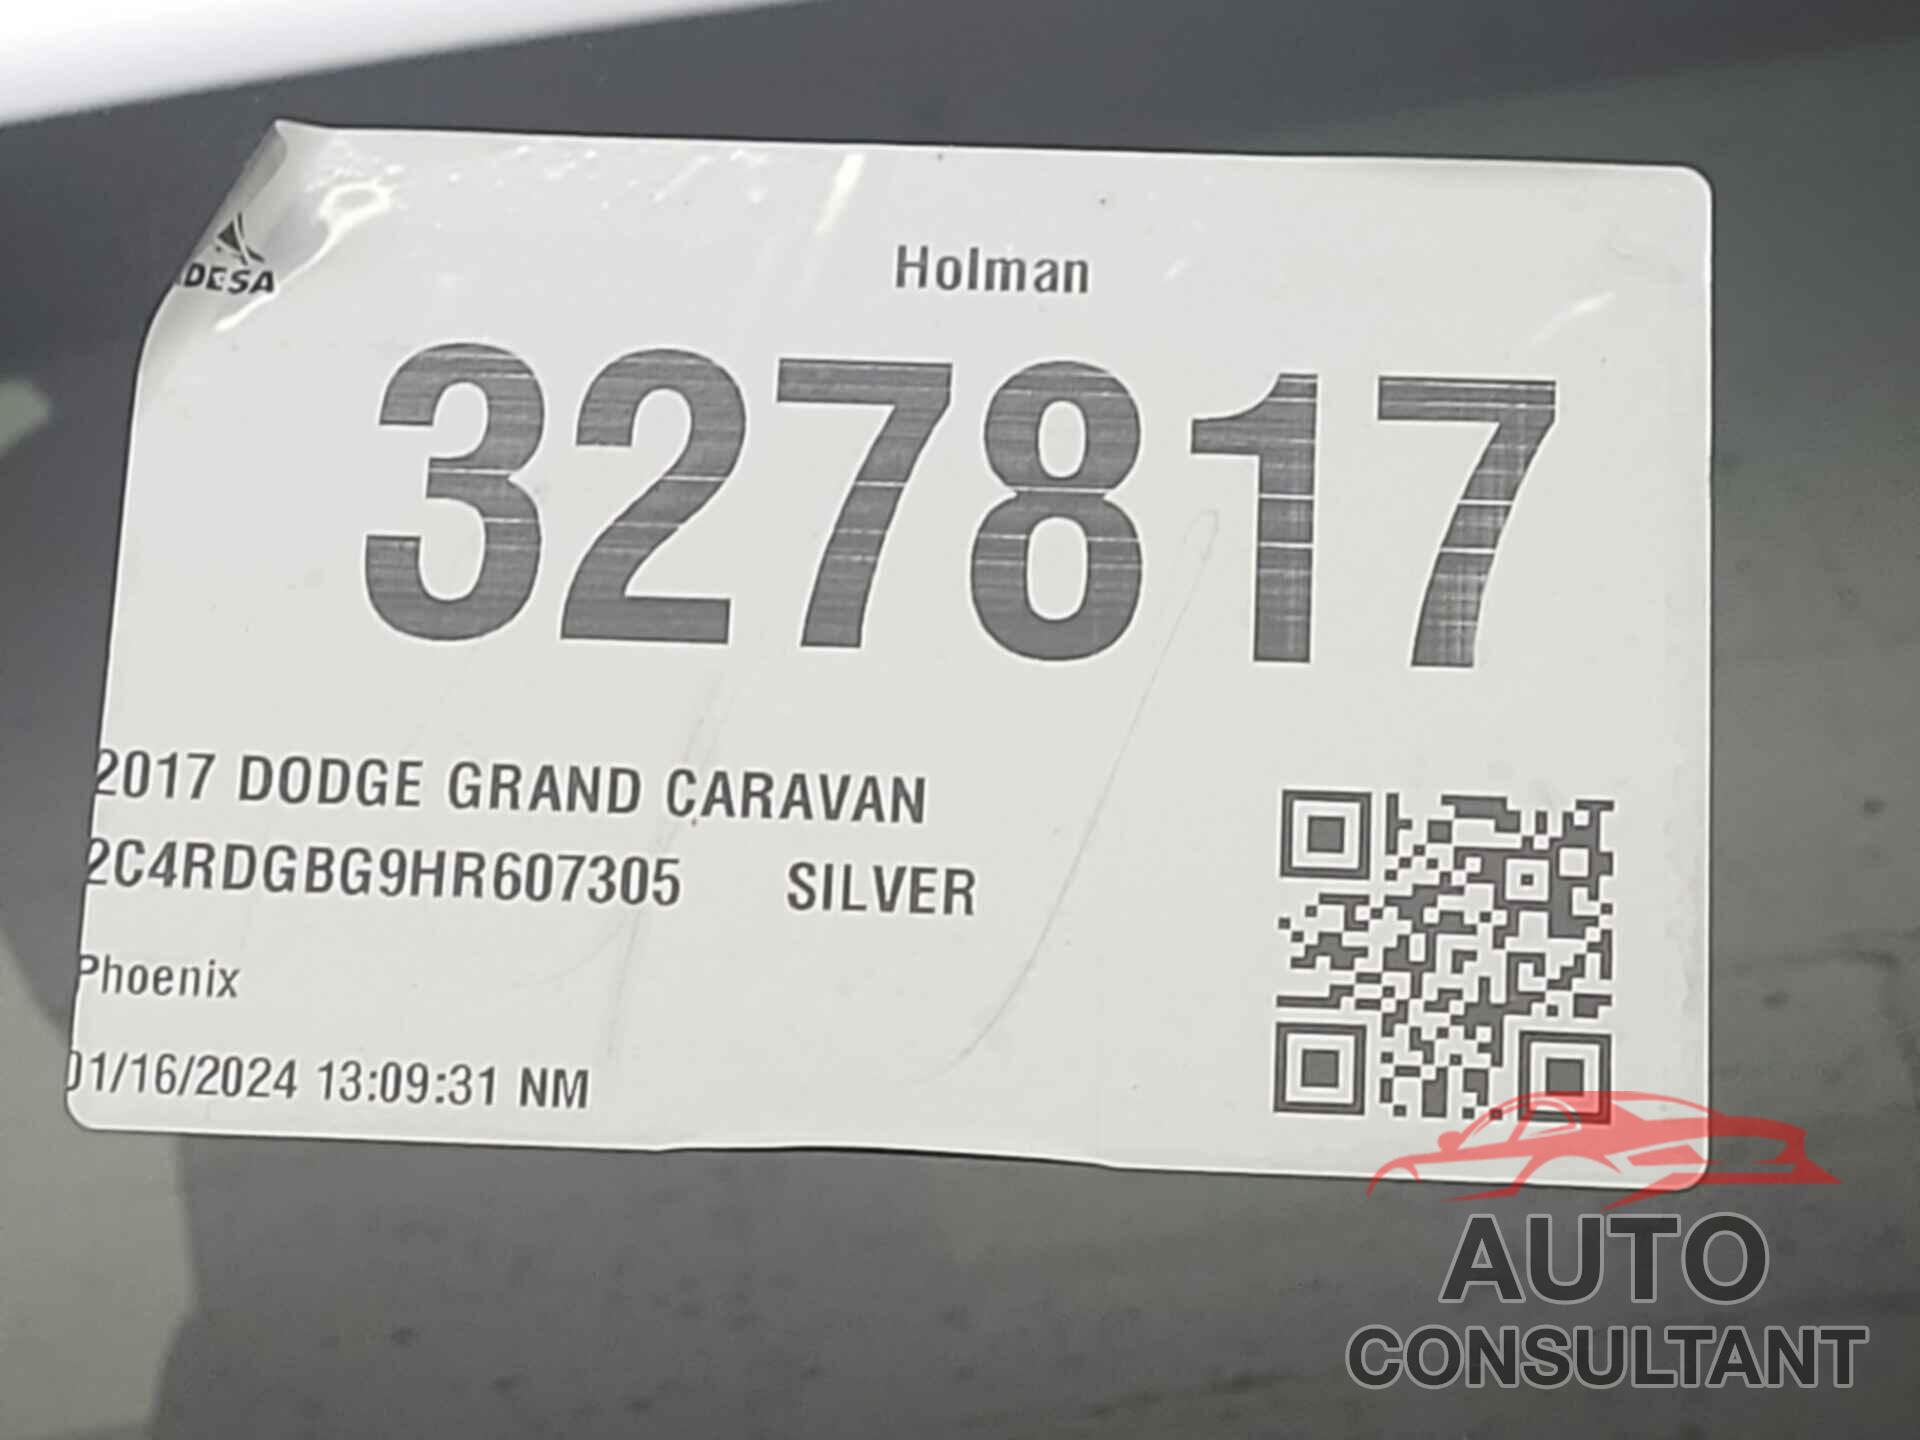 DODGE GRAND CARAVAN 2017 - 2C4RDGBG9HR607305